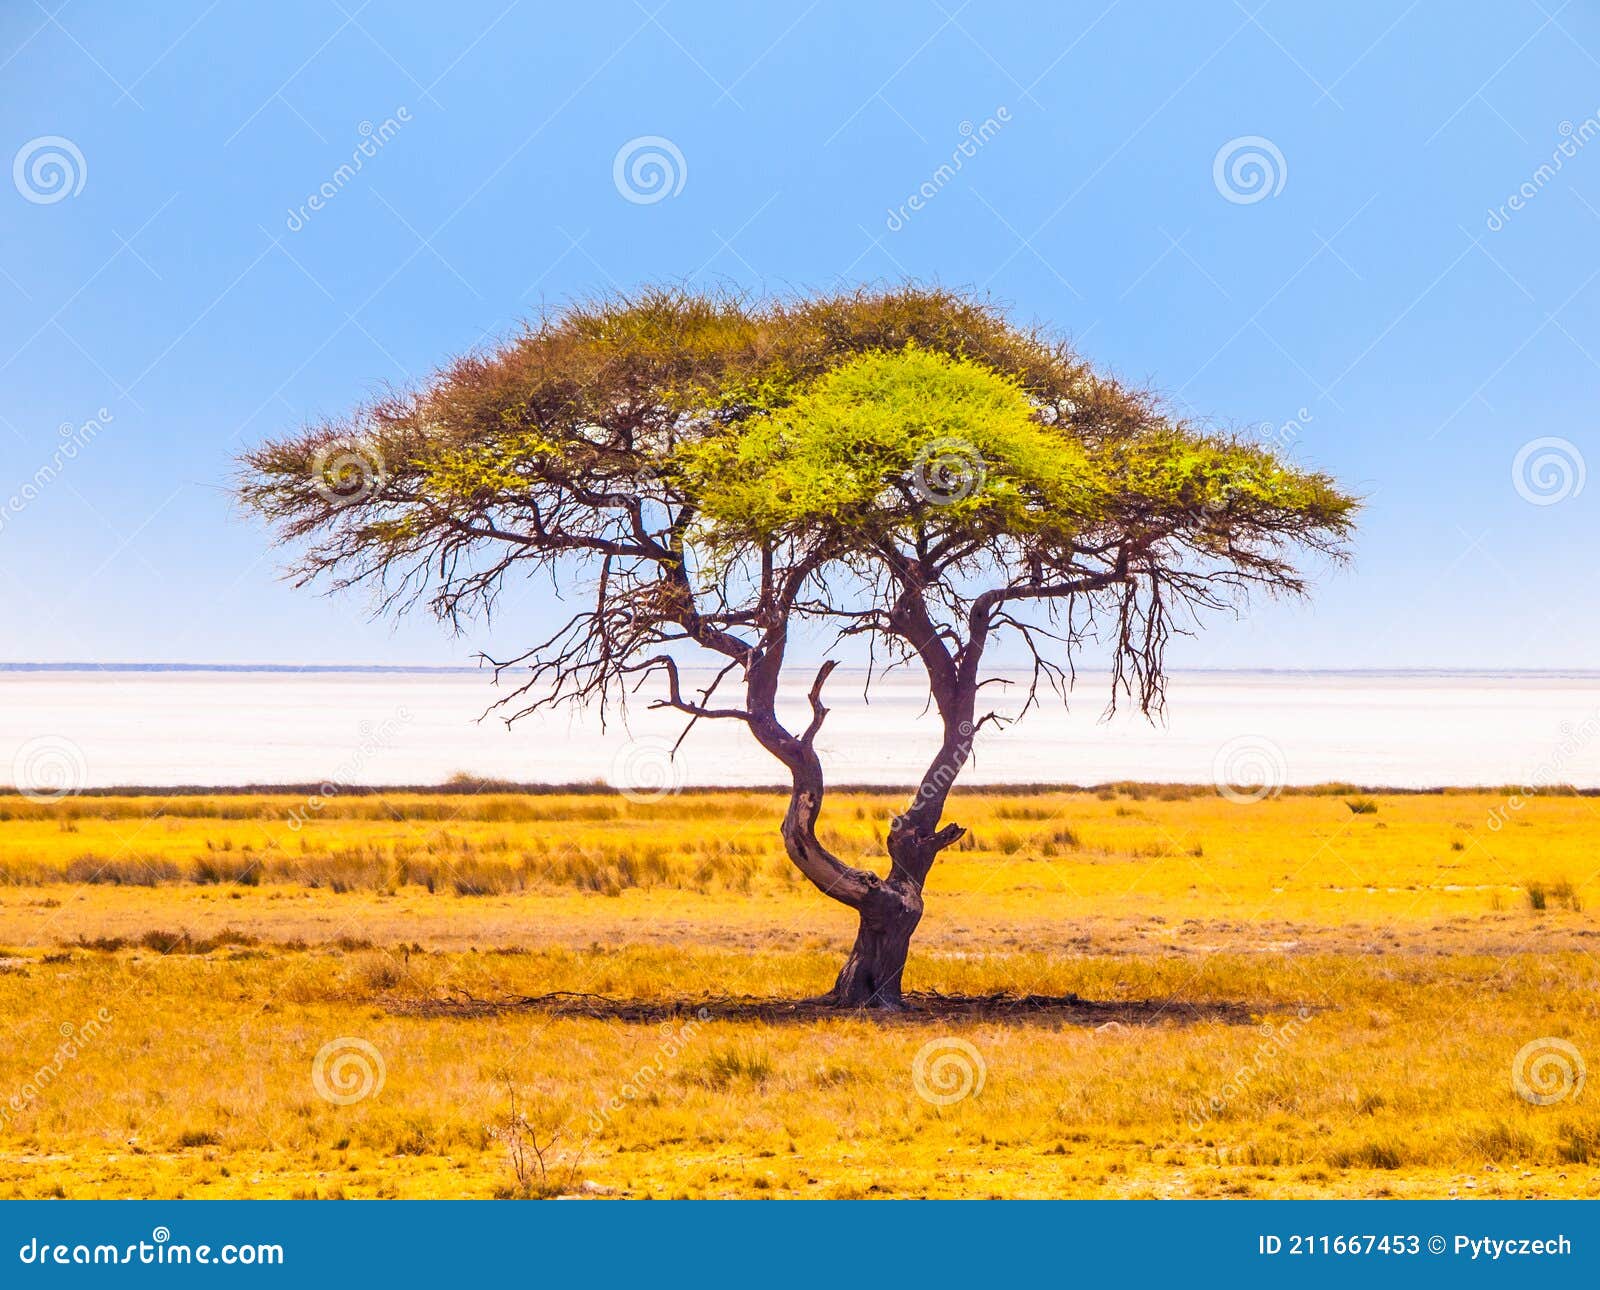 Umbrella Acacia Tree in Savanna Stock Image - Image of south, yellow:  211667453